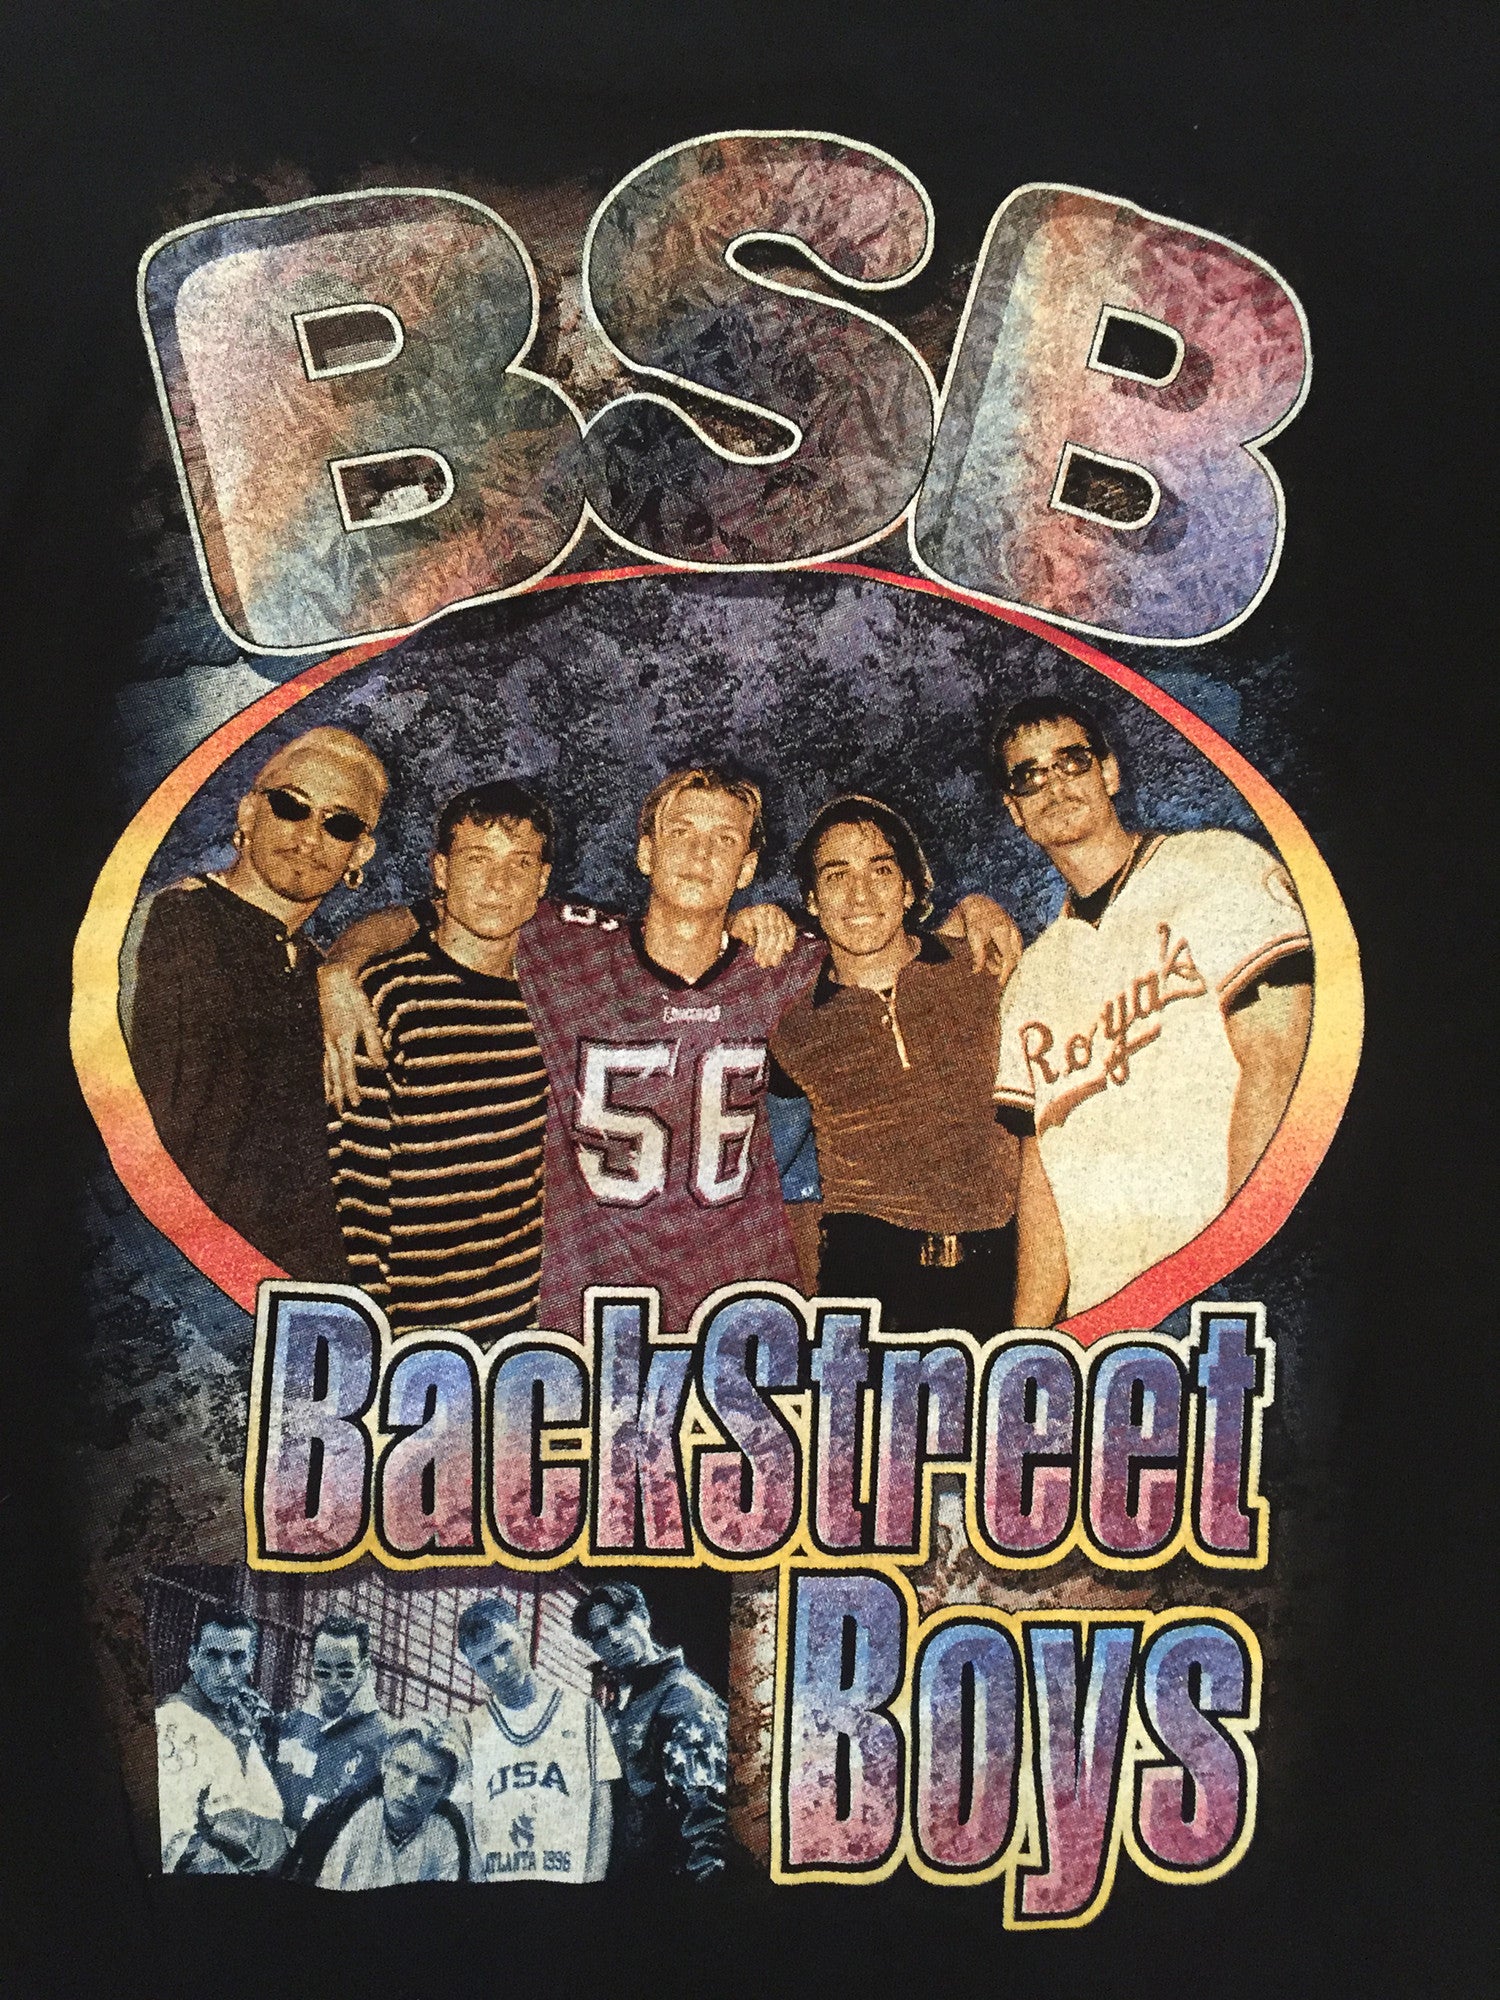 Real Vintage Backstreet Boys Bootleg T-Shirt (NEVER WORN)